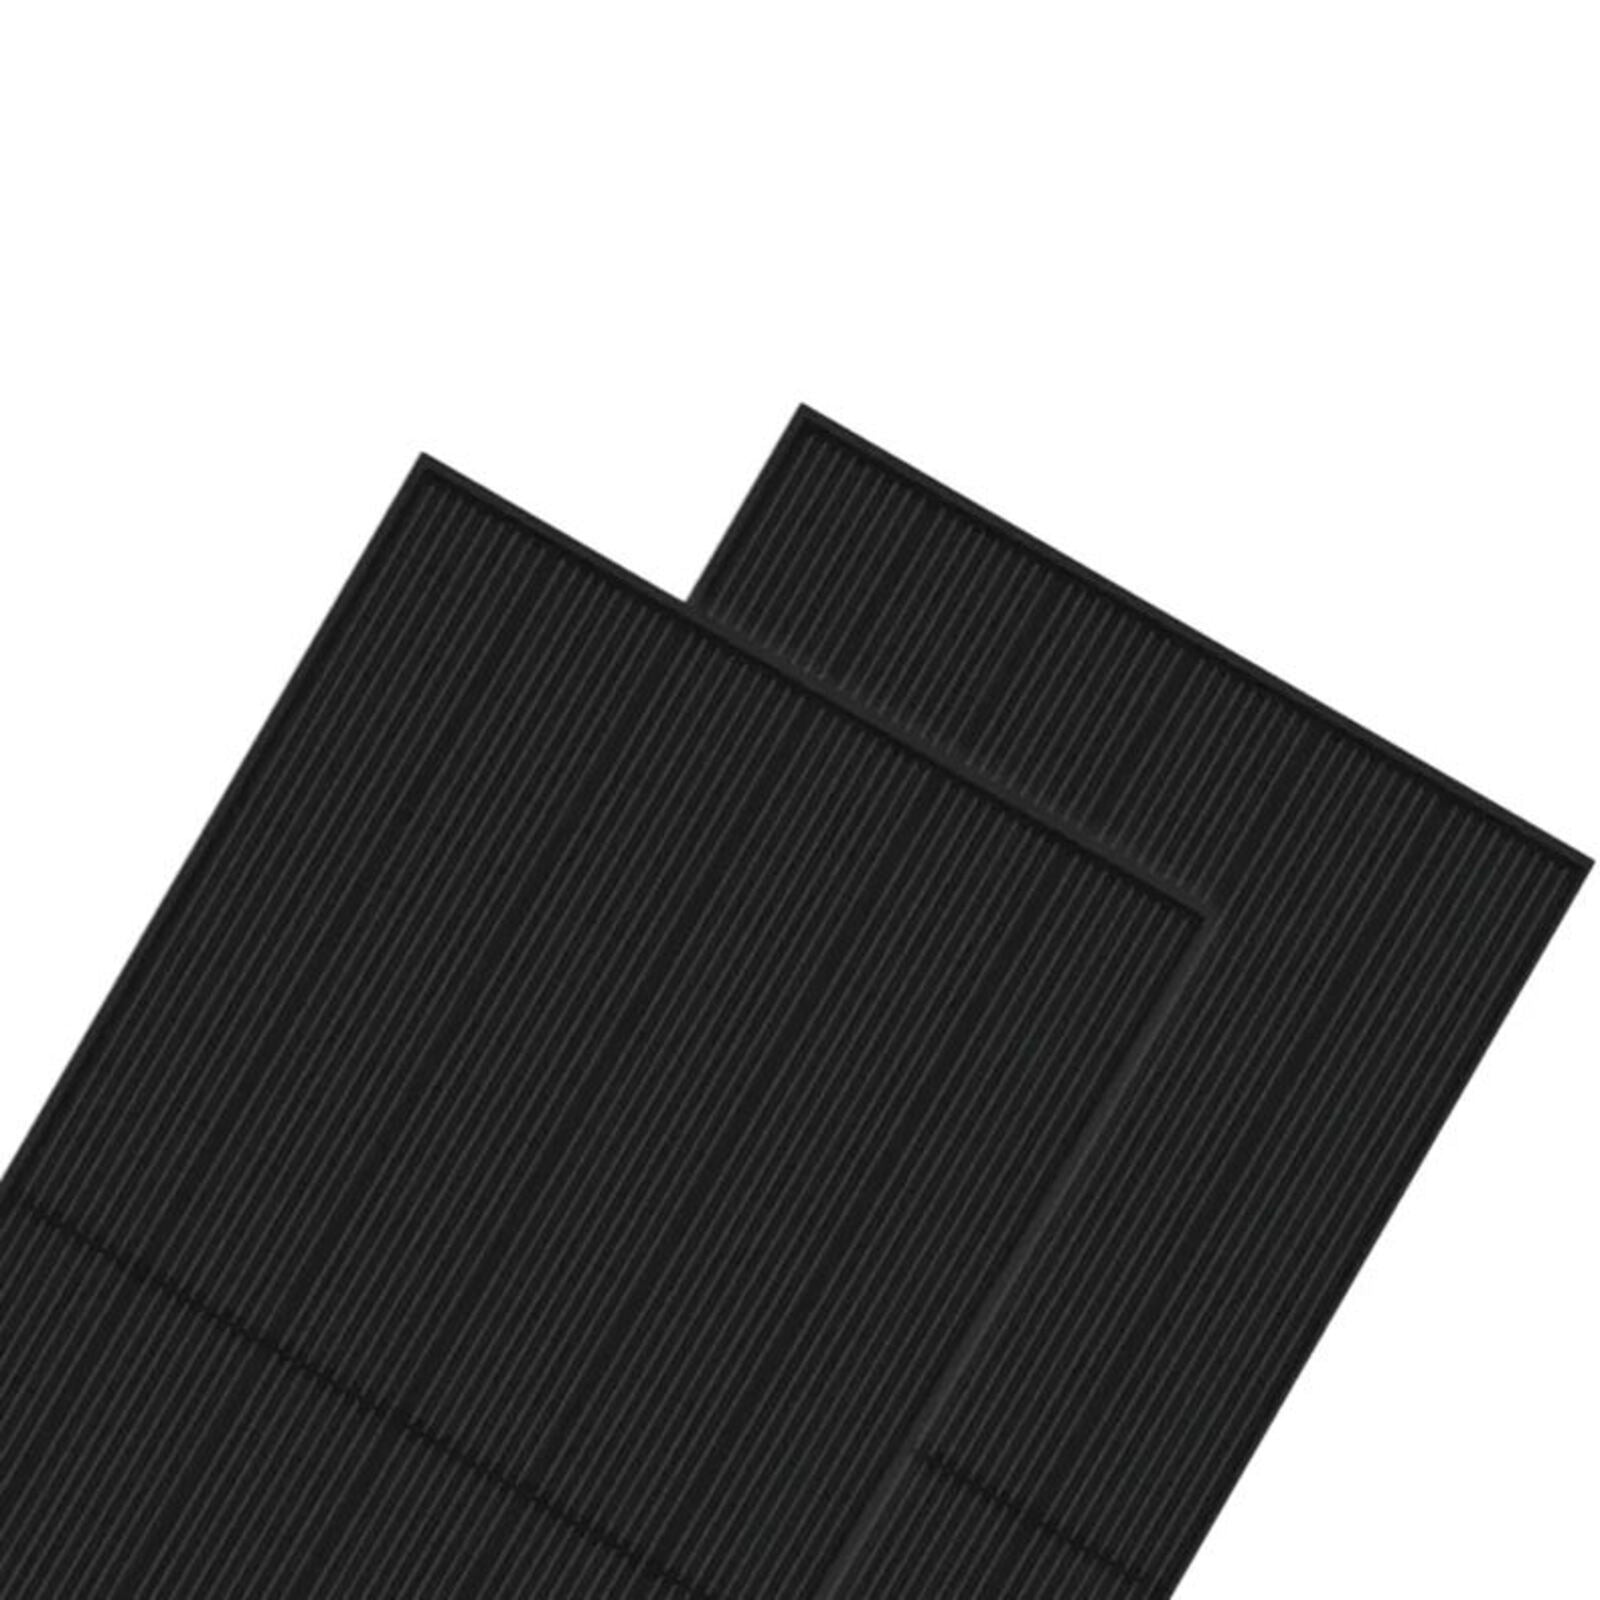 Panel Solar Overlapping Shingled Solar Panel Solar Module Panels450W 500W  450watt - China Solar Panel, PV Module